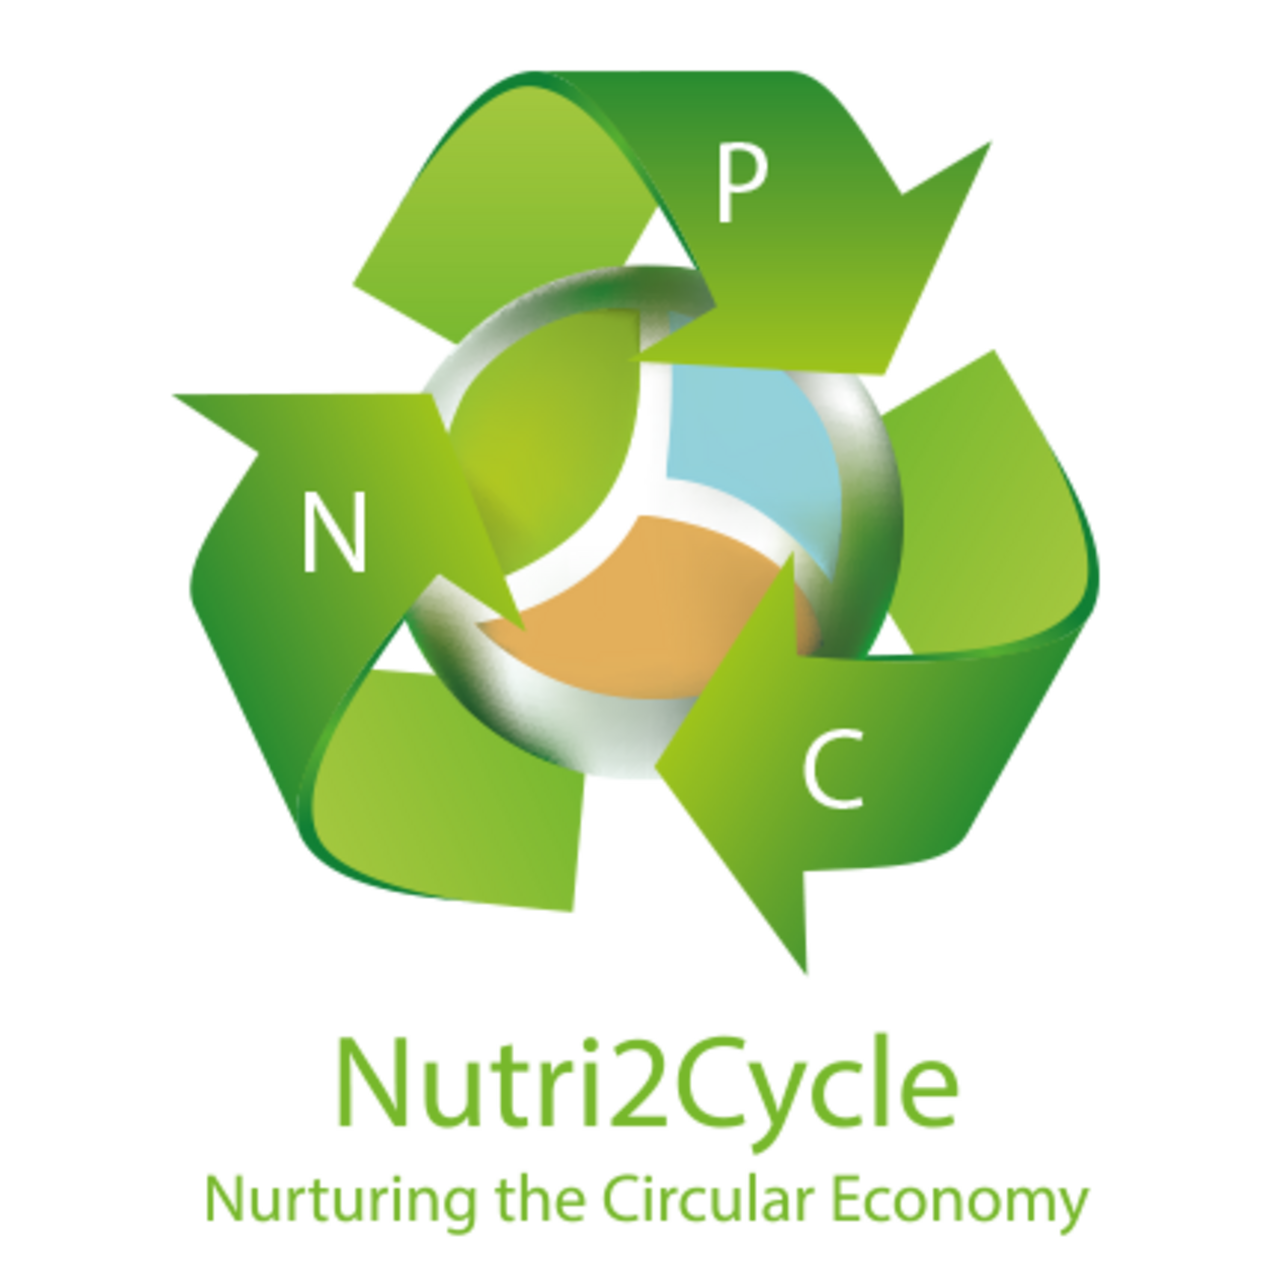 Nutri2Cycle – Nurturing the Circular Economy